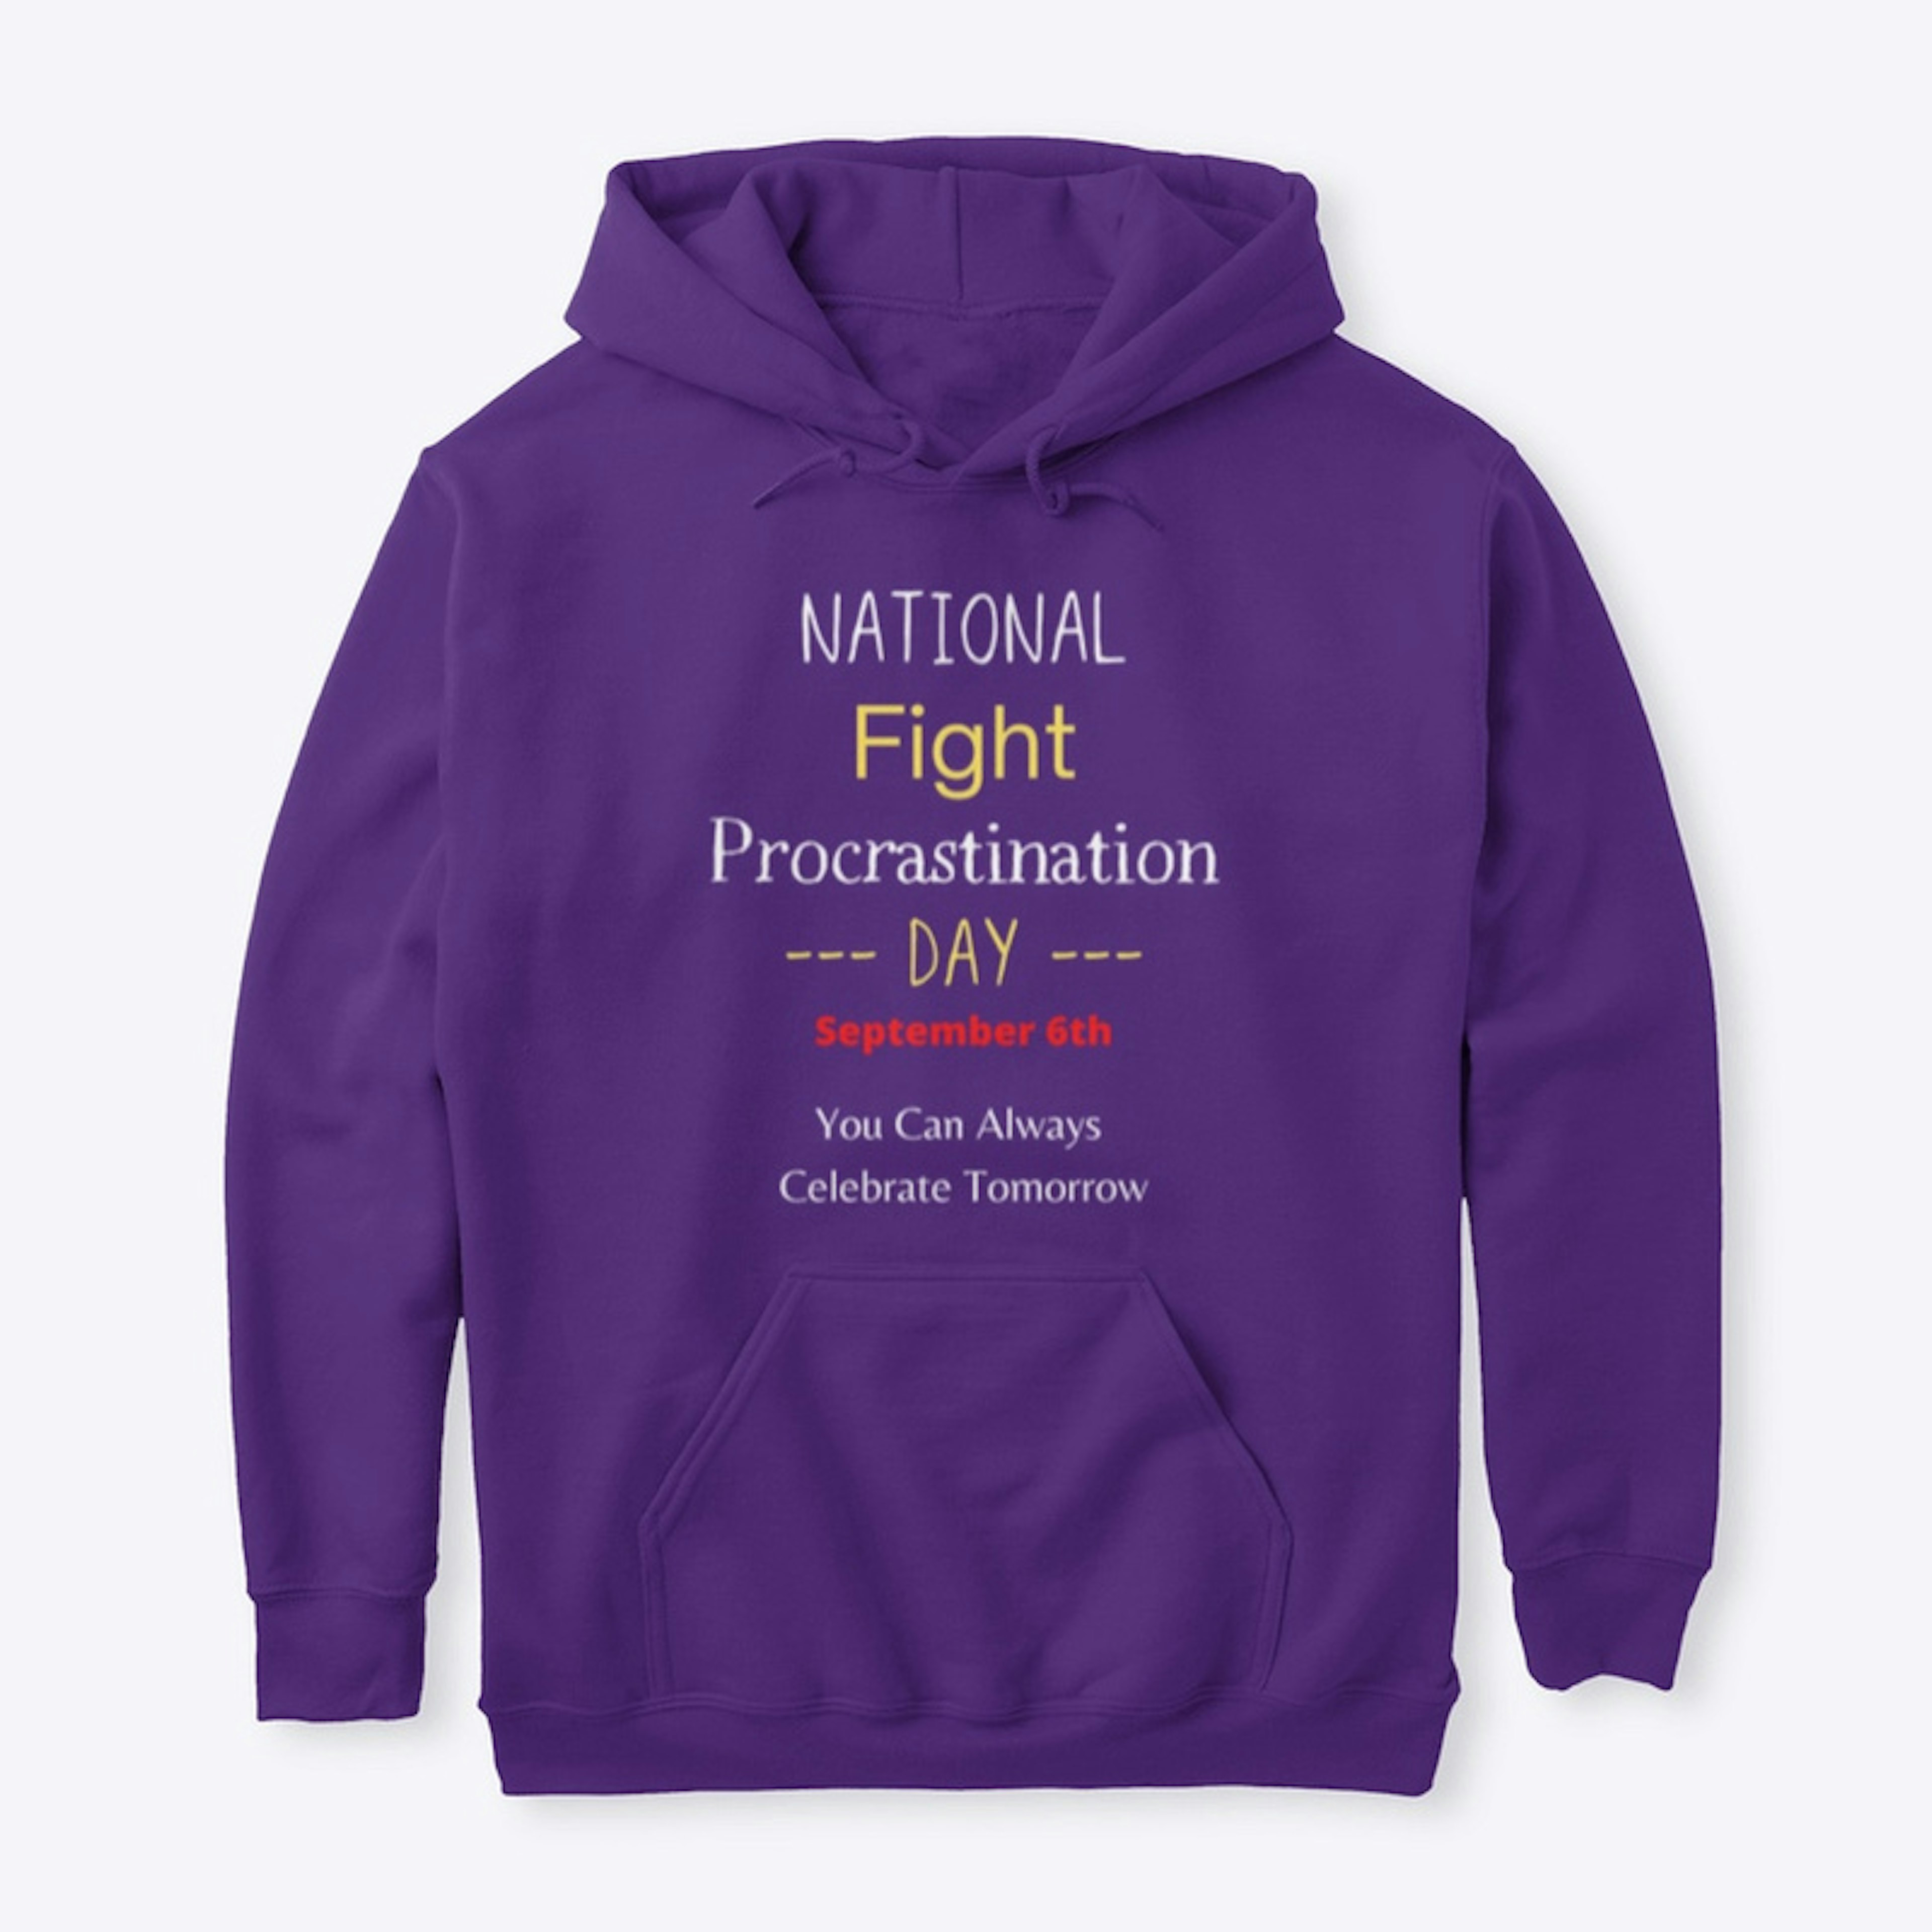 National Fight Procrastination Day